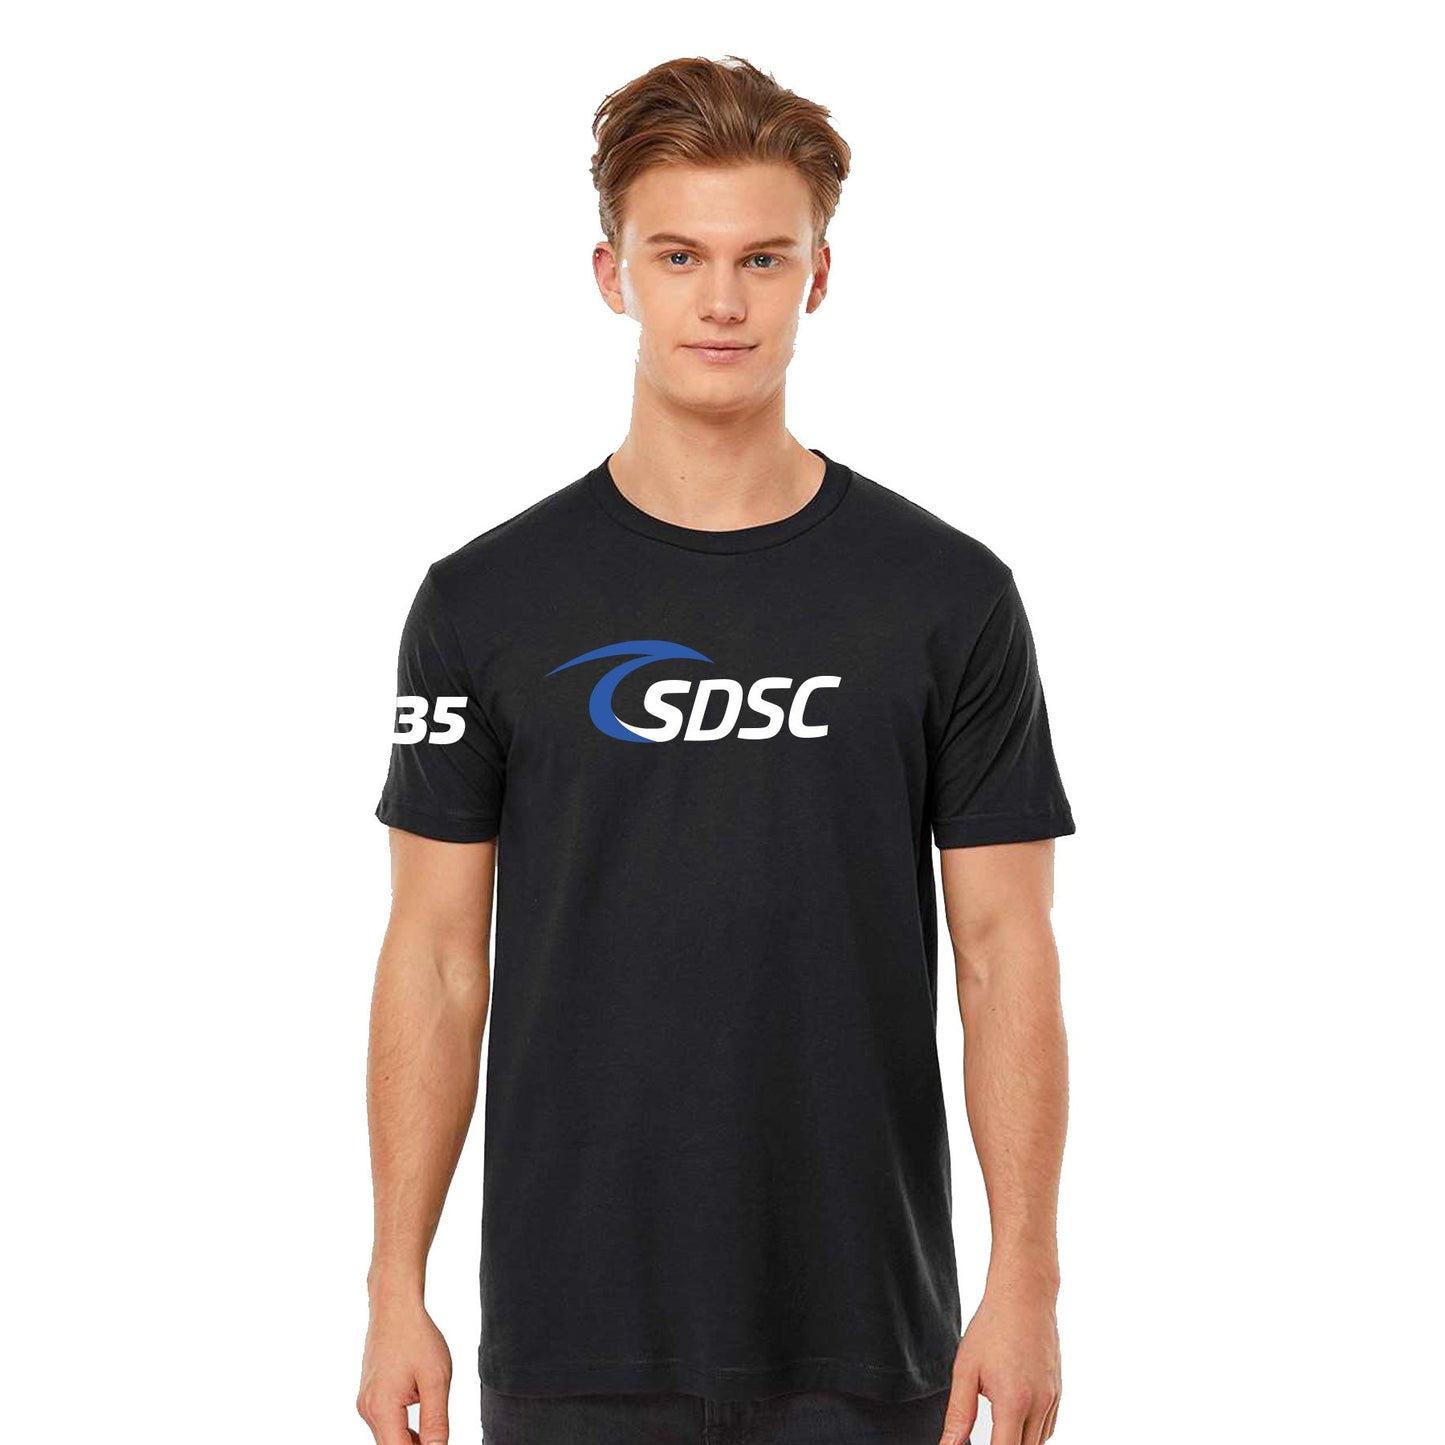 SDSC LOGO CLASSIC T-SHIRT